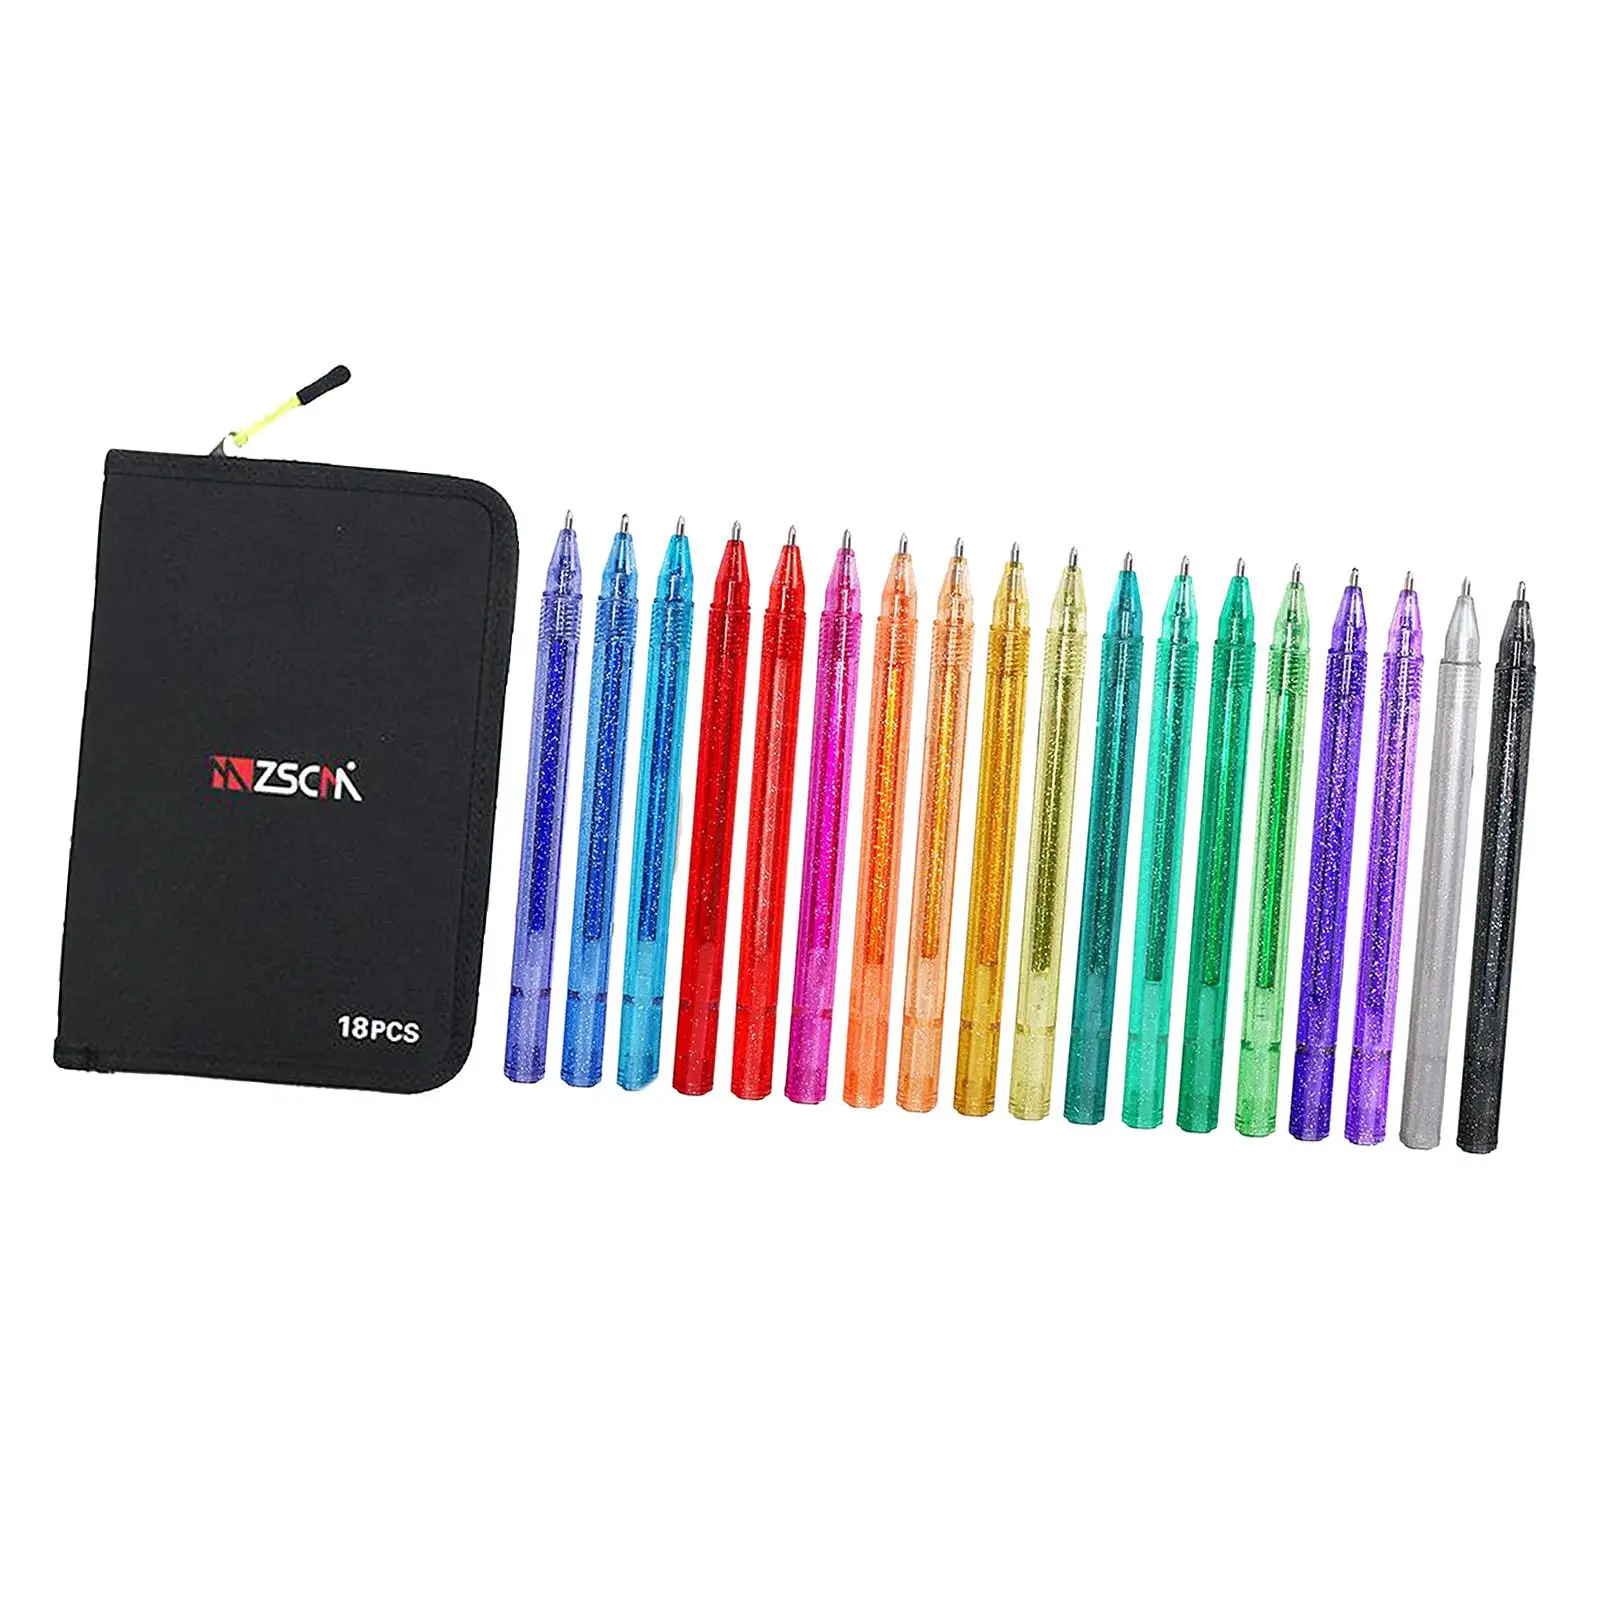 18x Neon Pen Marker Pen with Carry Case - Gel Refills Pens Drawing